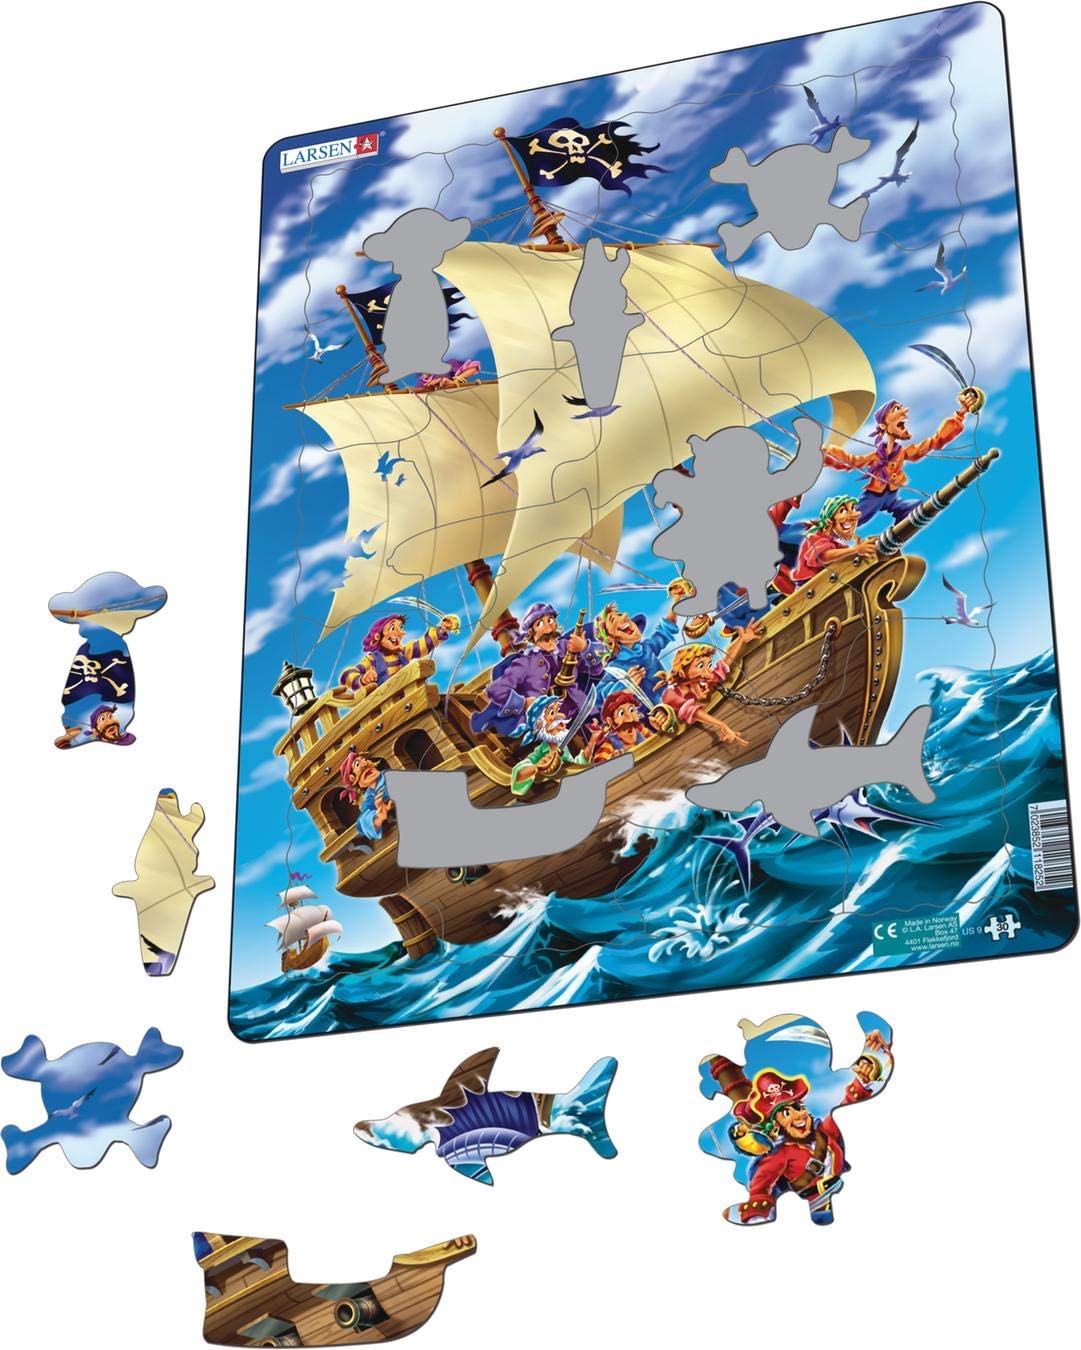 maxi puzzel piraten inval 30st- maxi puzzle raid des pirates 30pc